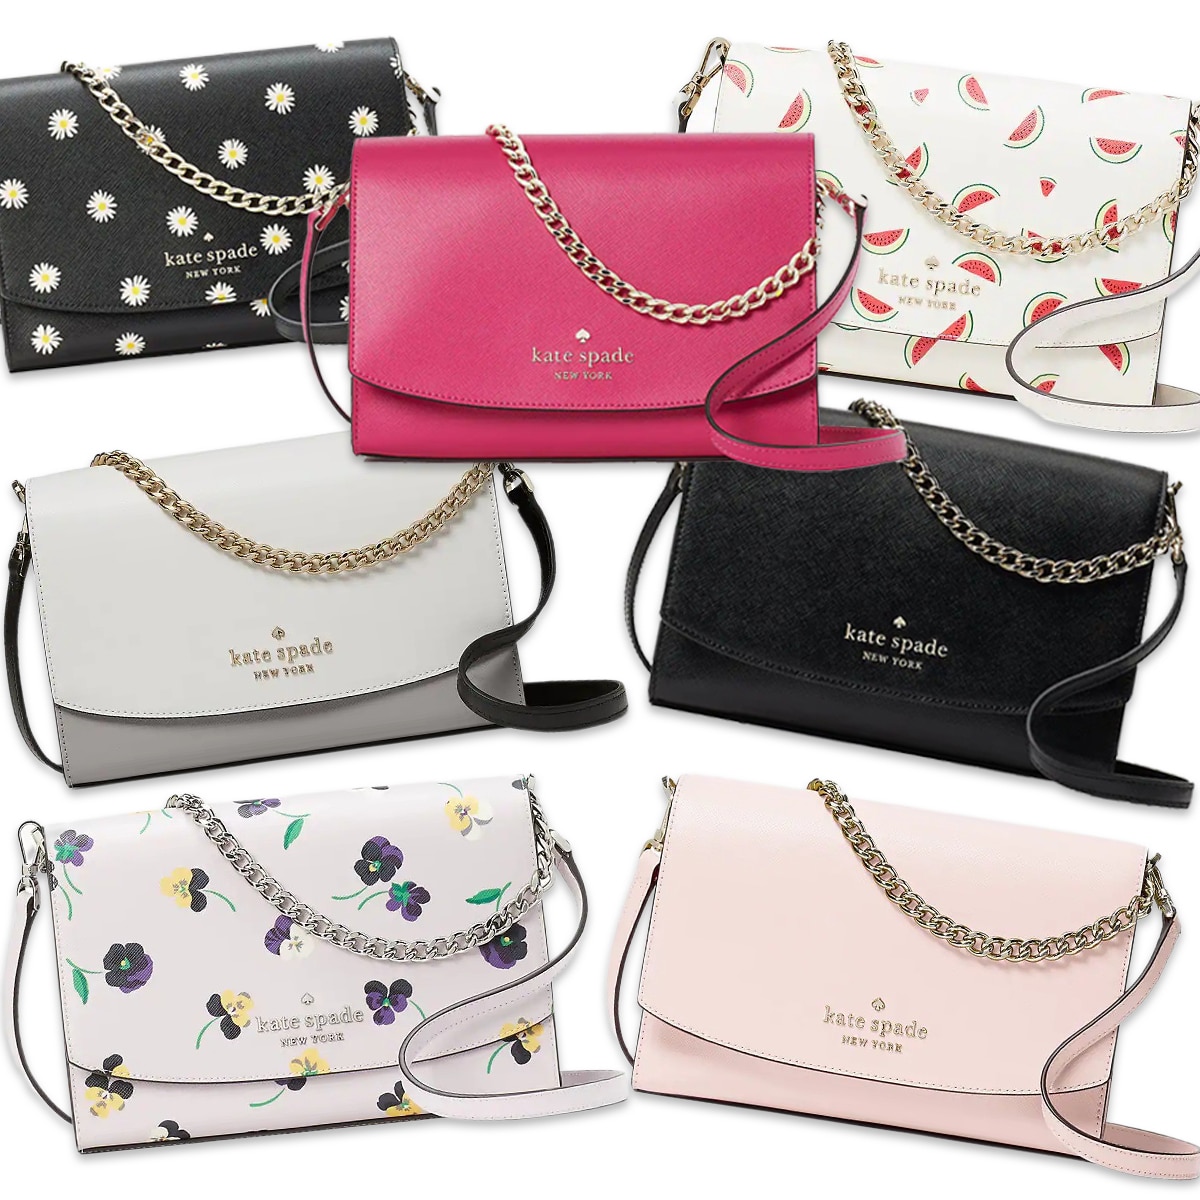 Kate Spade - Women's handbags